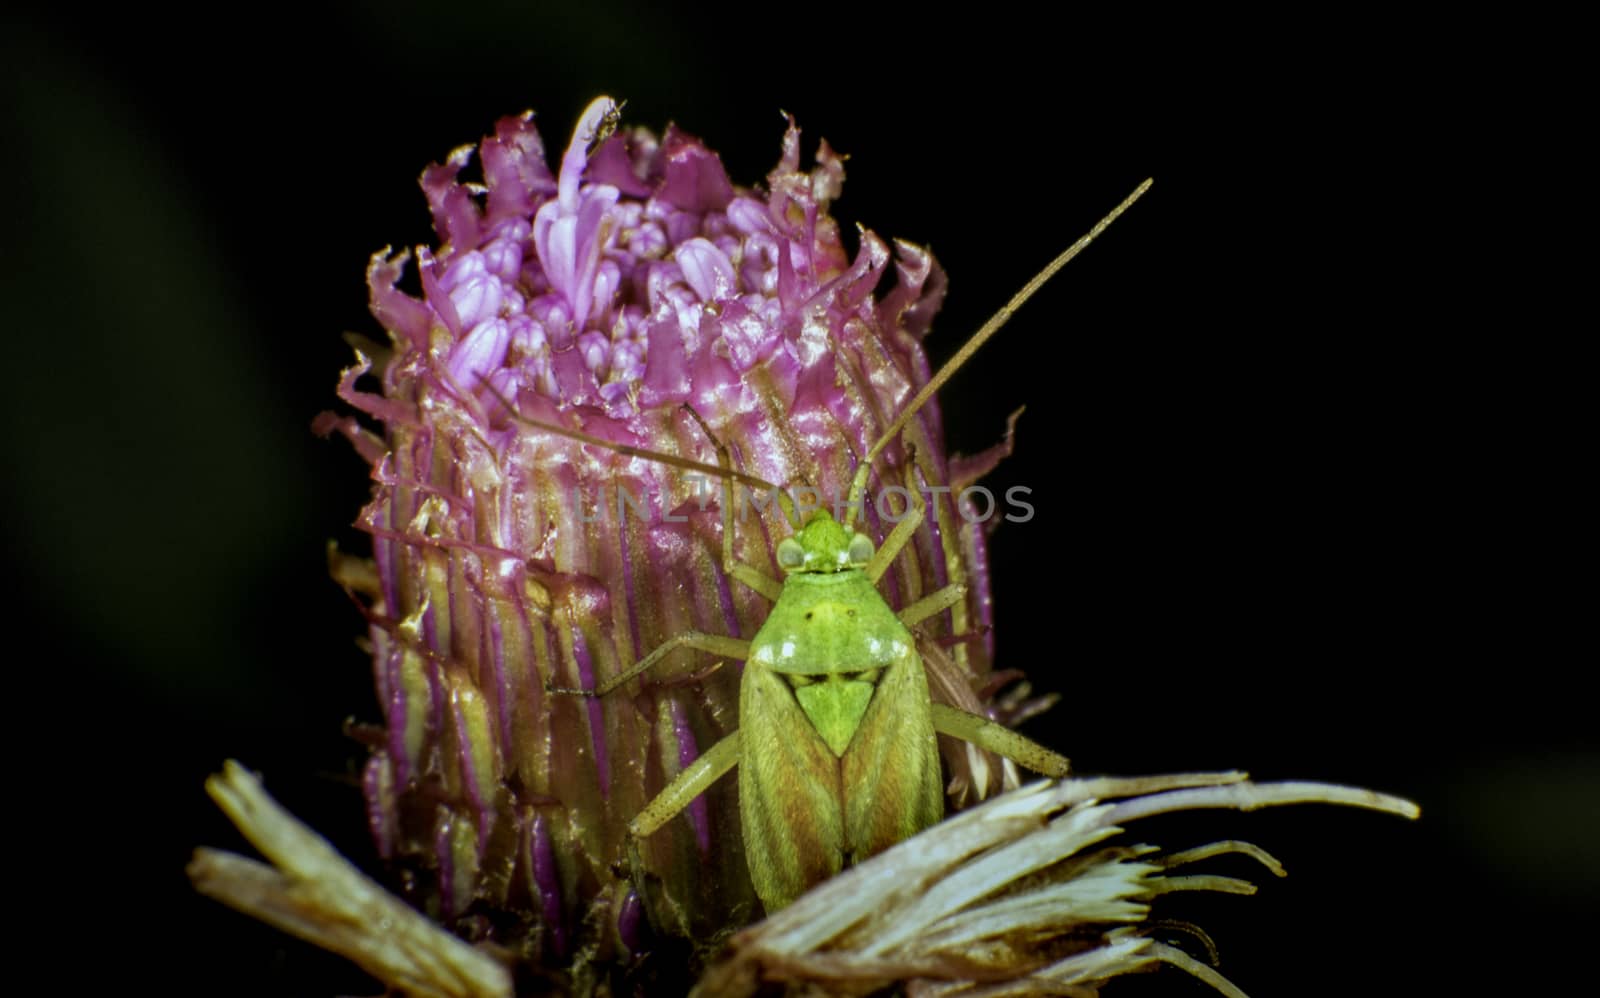 Green Beetle on a flower